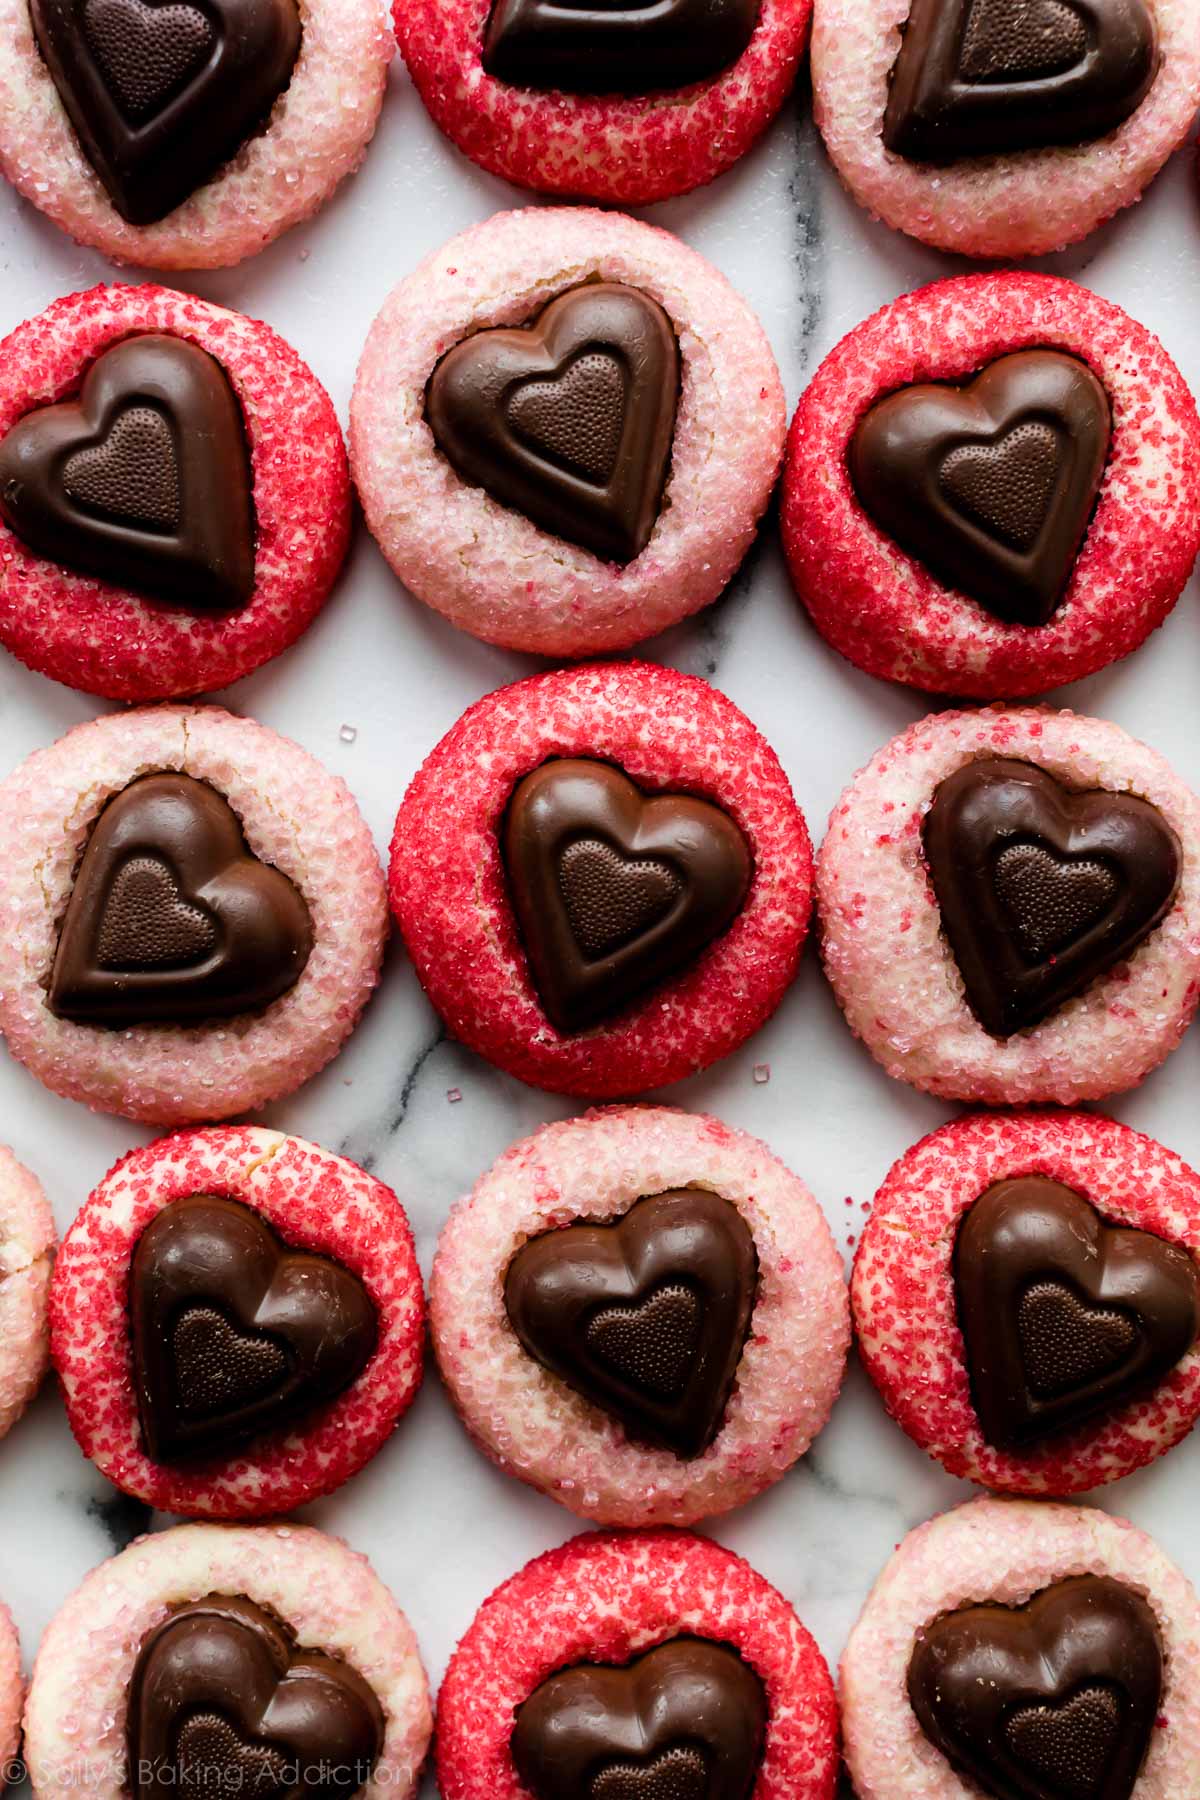 Sparkle Sweetheart Cookies - Sally's Baking Addiction